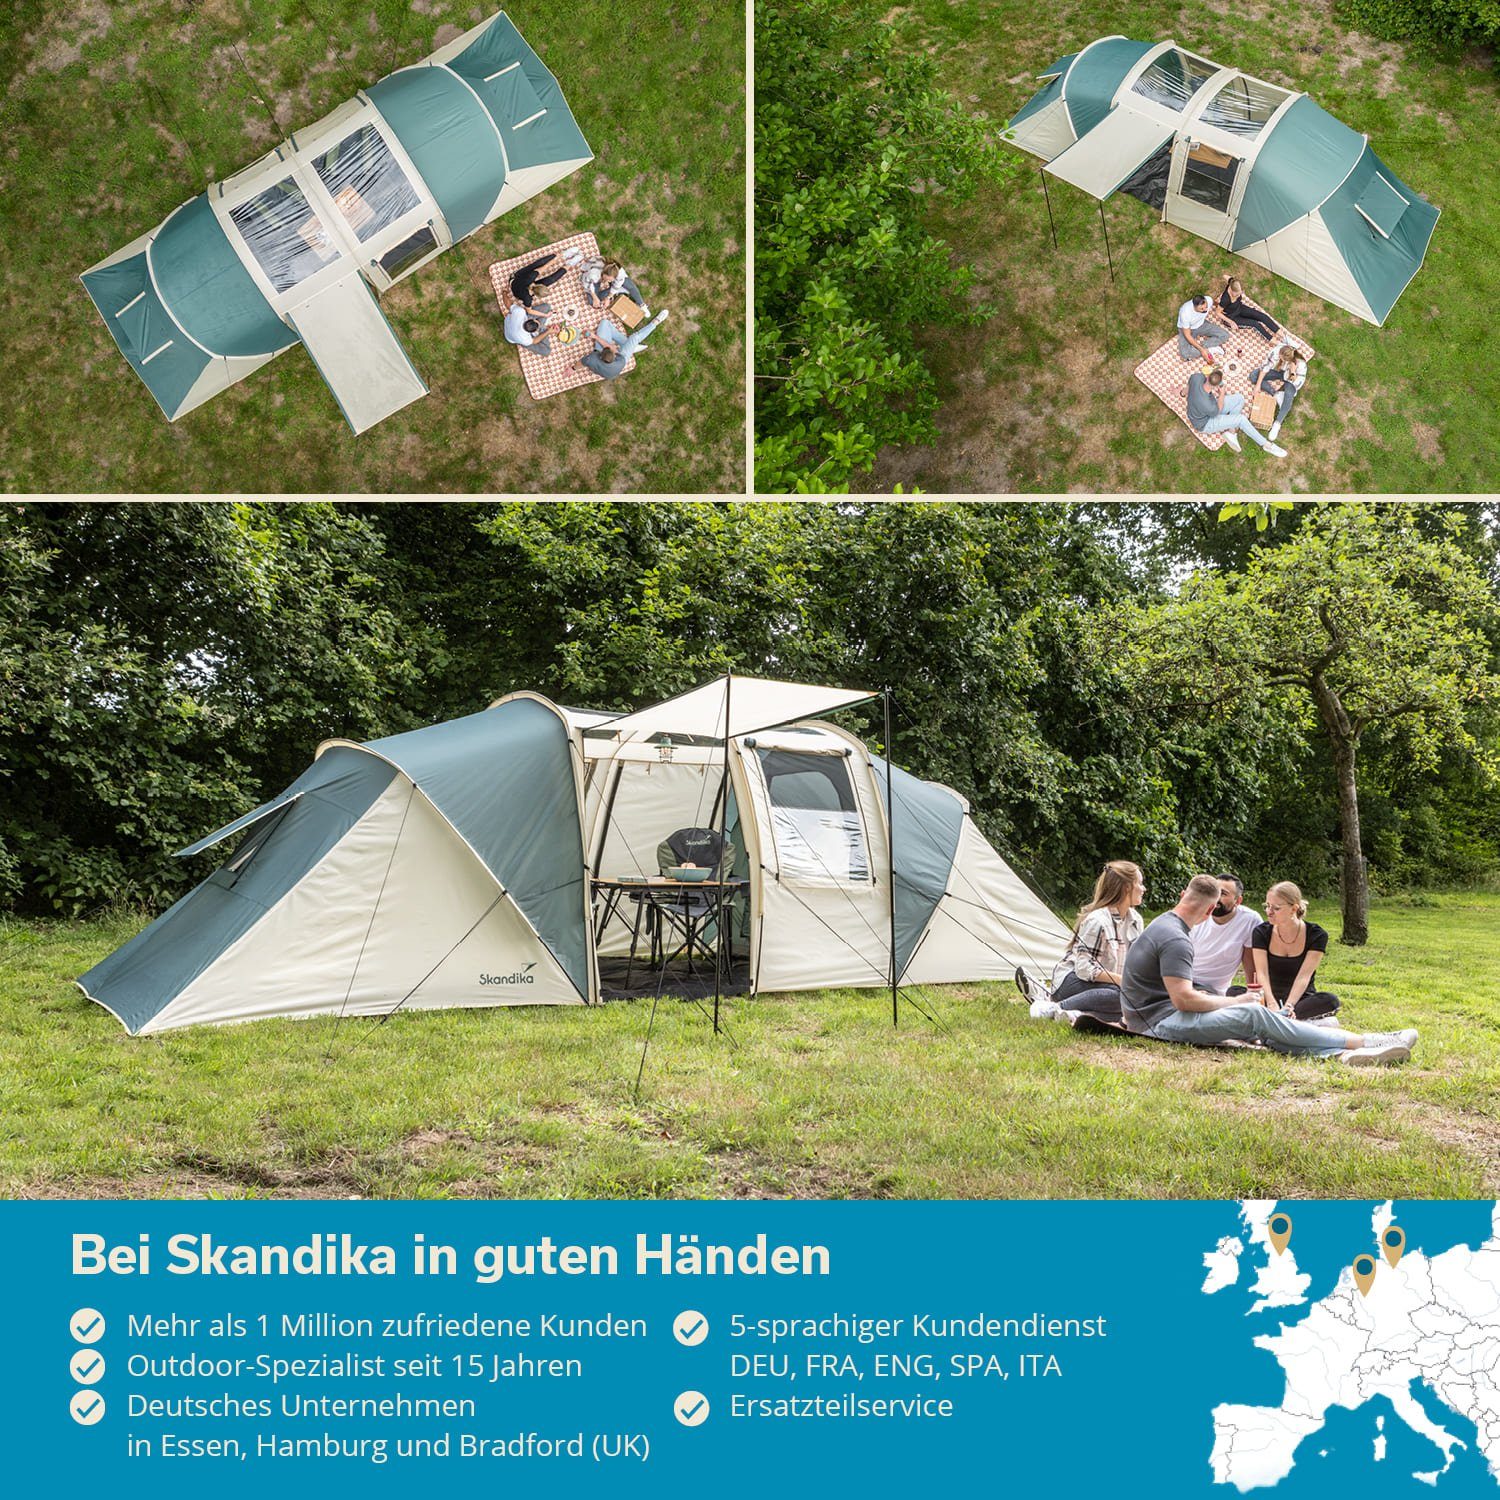 Skandika Kuppelzelt Kalmar Zelt 3000 6, Wassersäule, mm Camping, für Outdoor Familienzelt